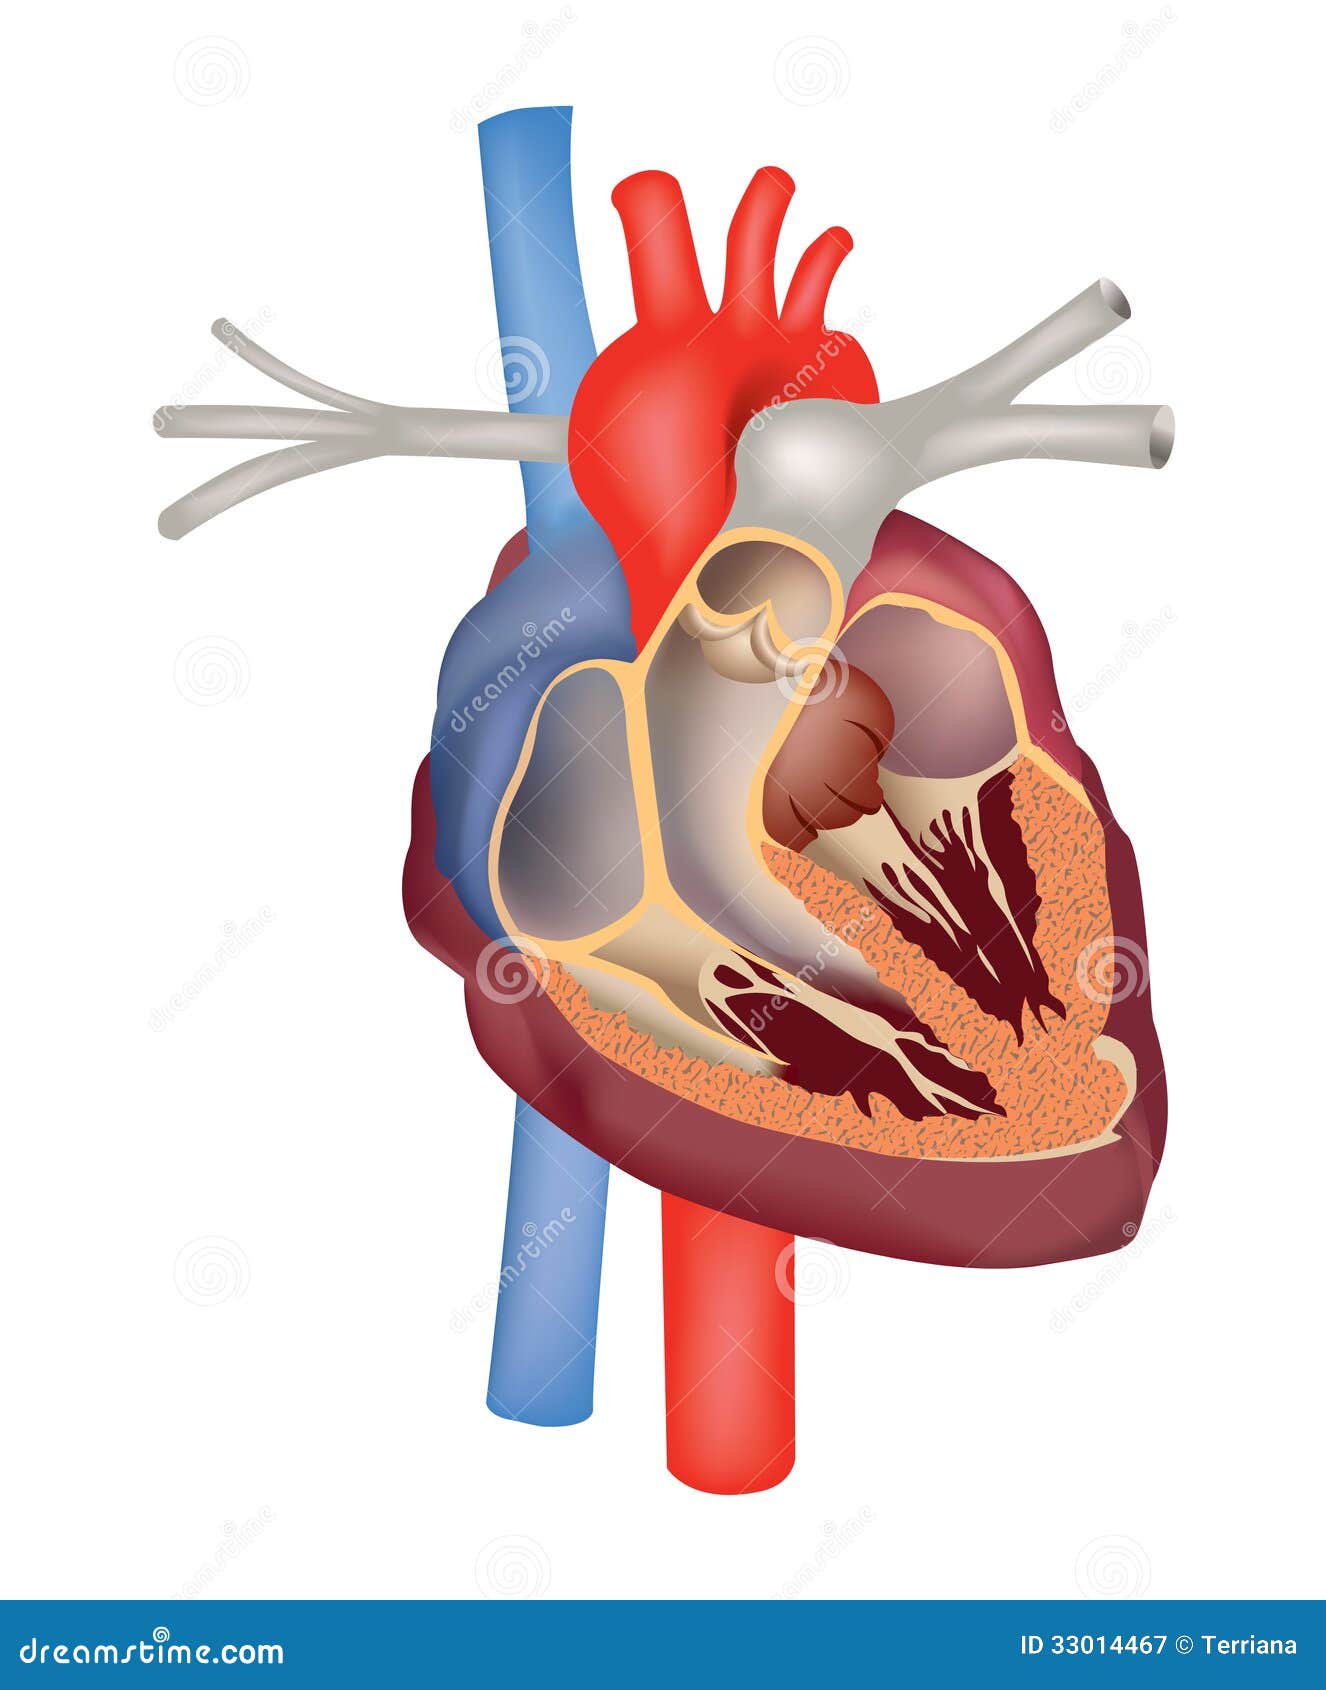 healthy human heart diagram